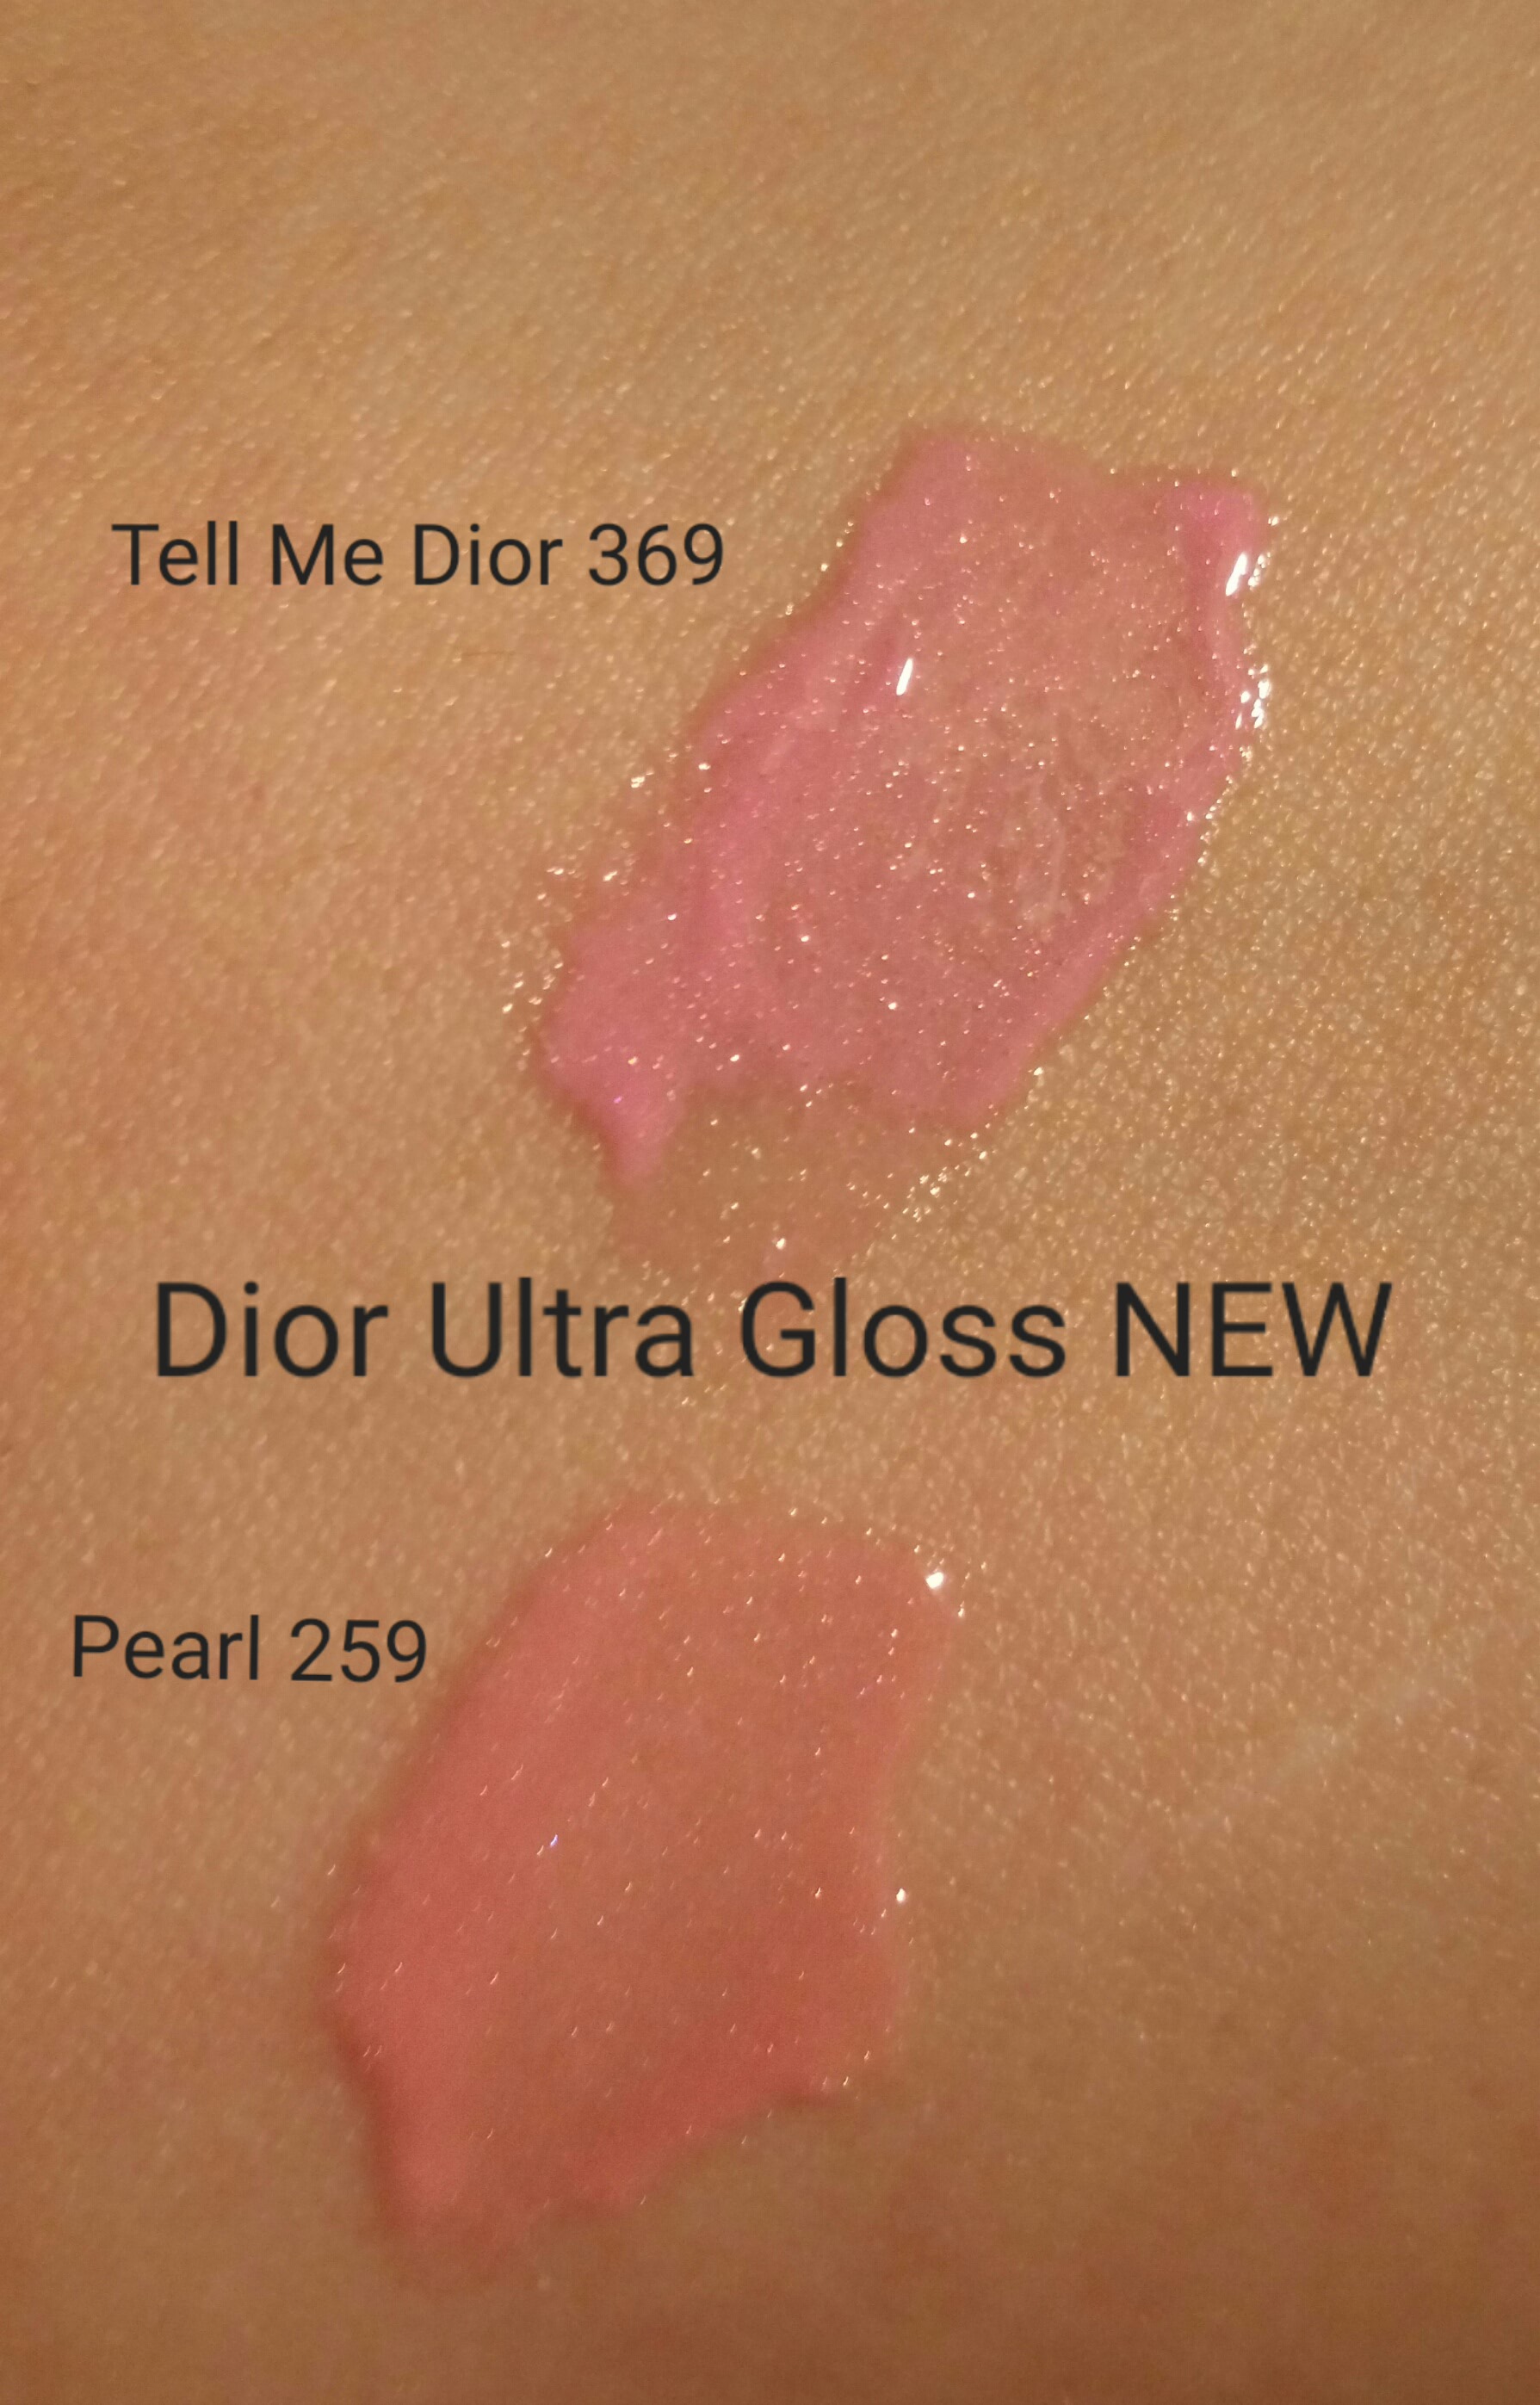 dior addict ultra gloss 369